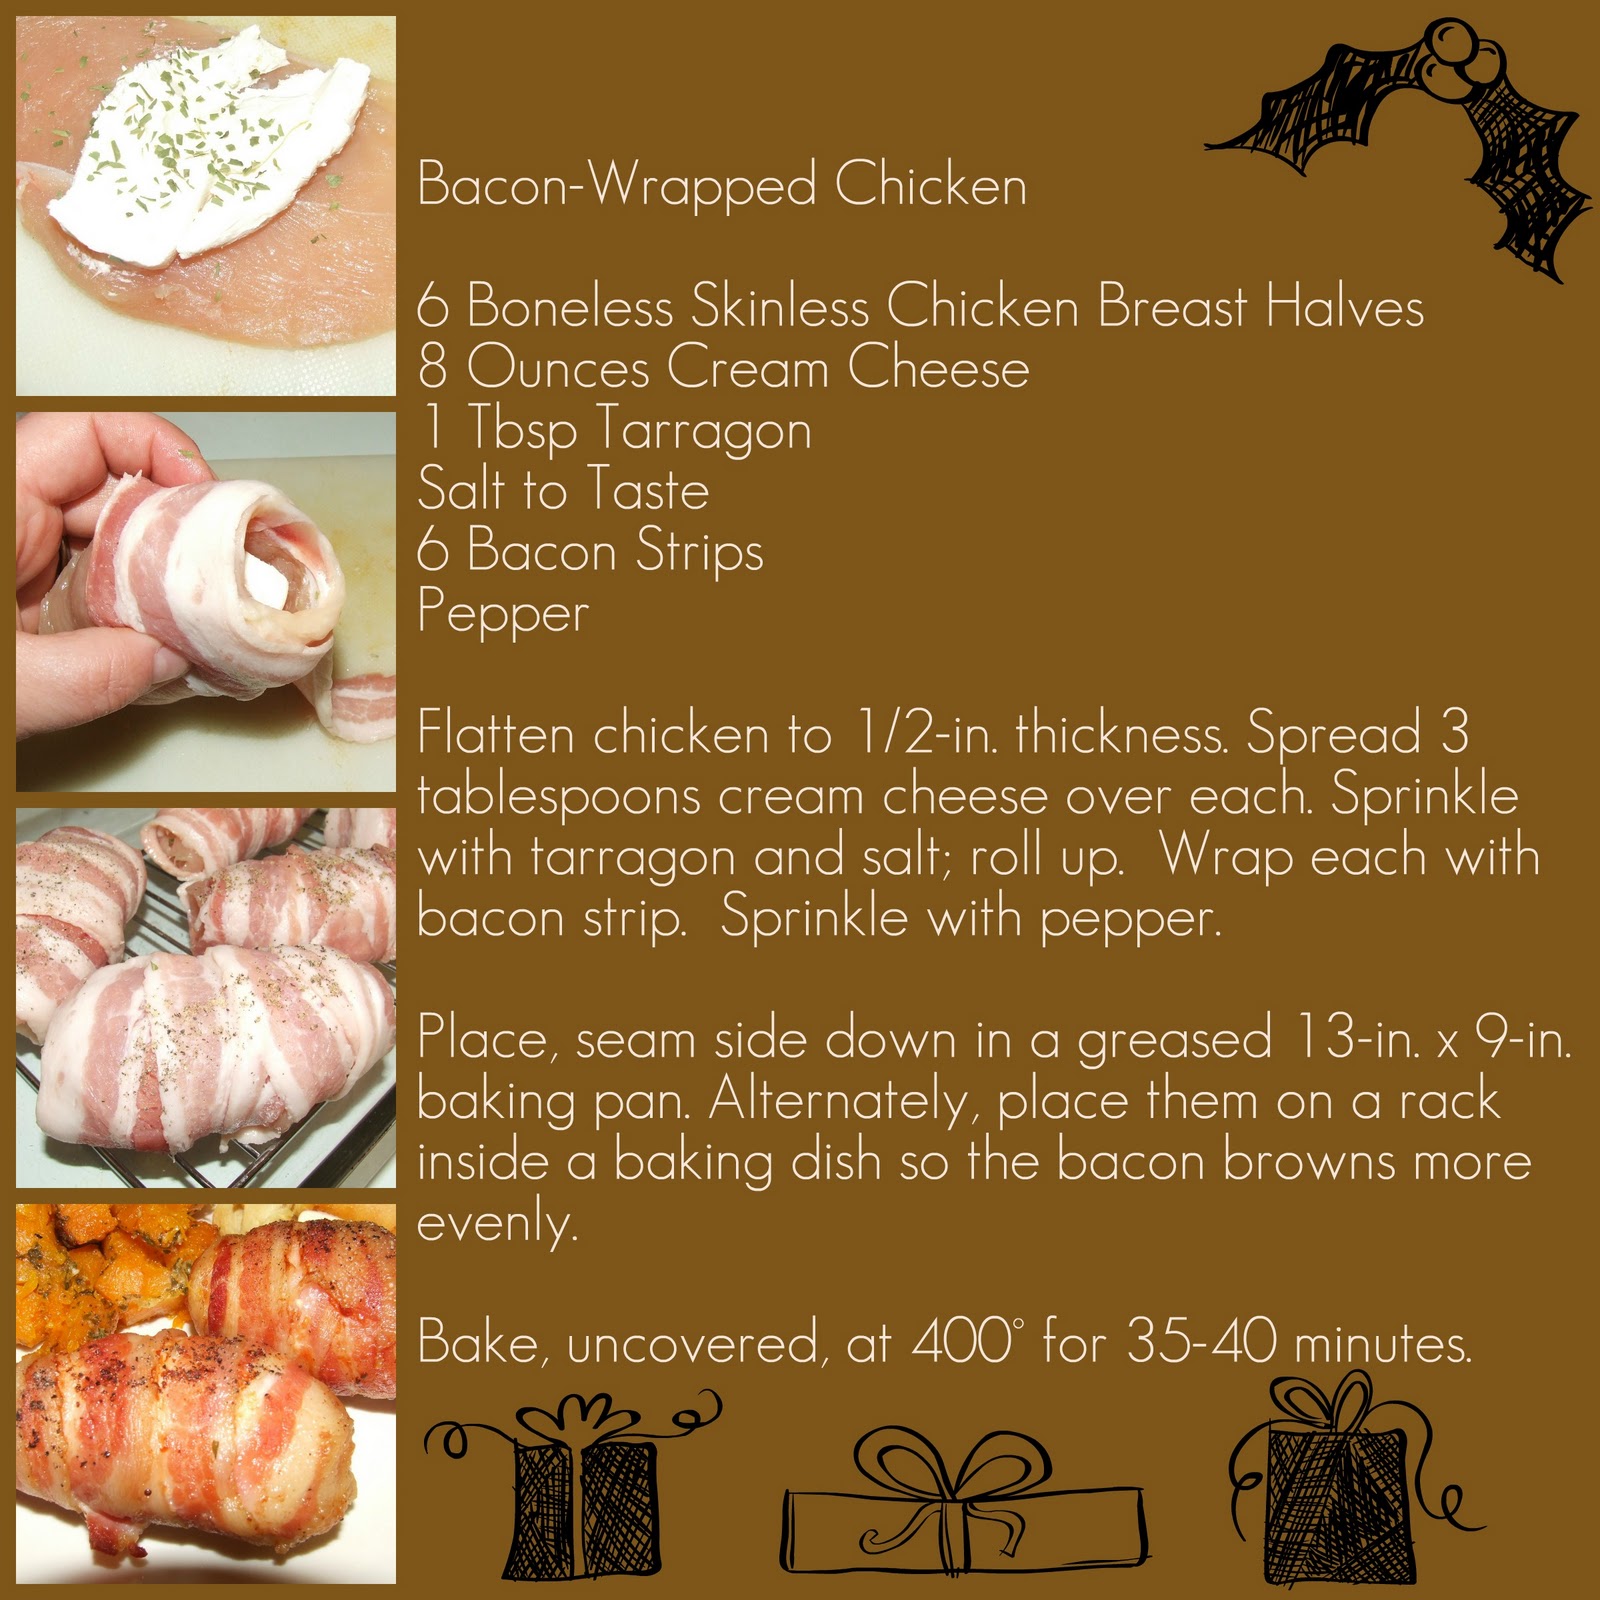 http://2.bp.blogspot.com/-HyhmtFFcNJg/TupXw1I98aI/AAAAAAAAJcA/gTmo7TTItmI/s1600/bacon+wrapped+chicken.jpg